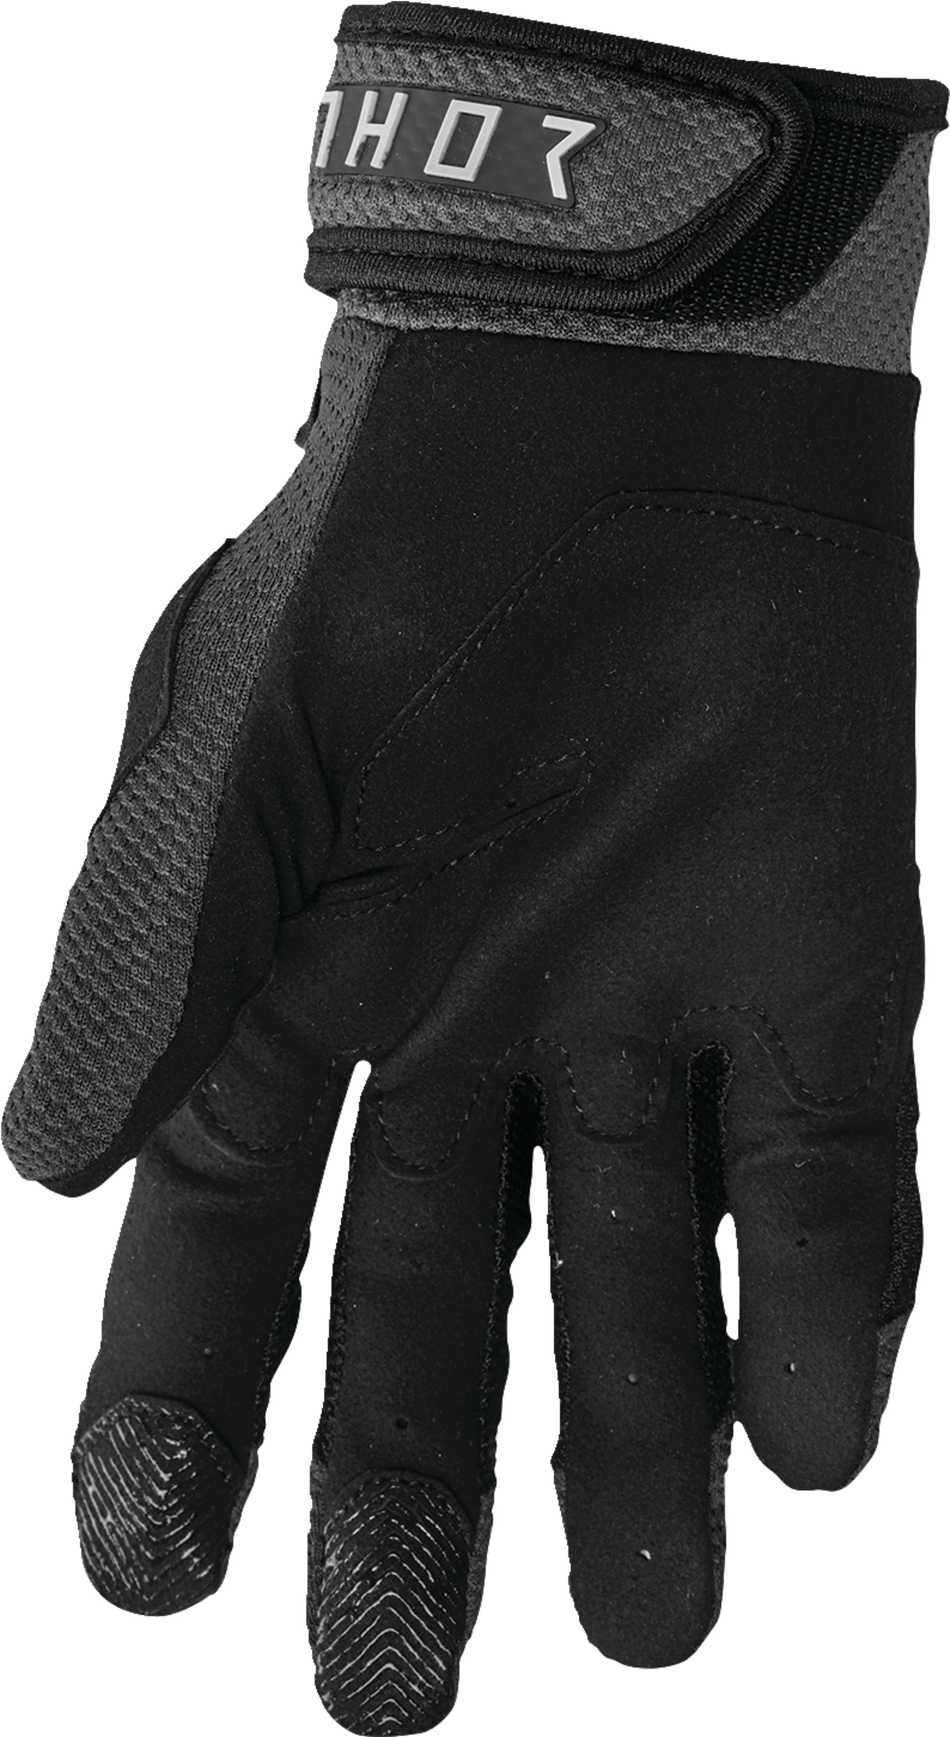 THOR Terrain Gloves - Black/Charcoal - Small 3330-7280